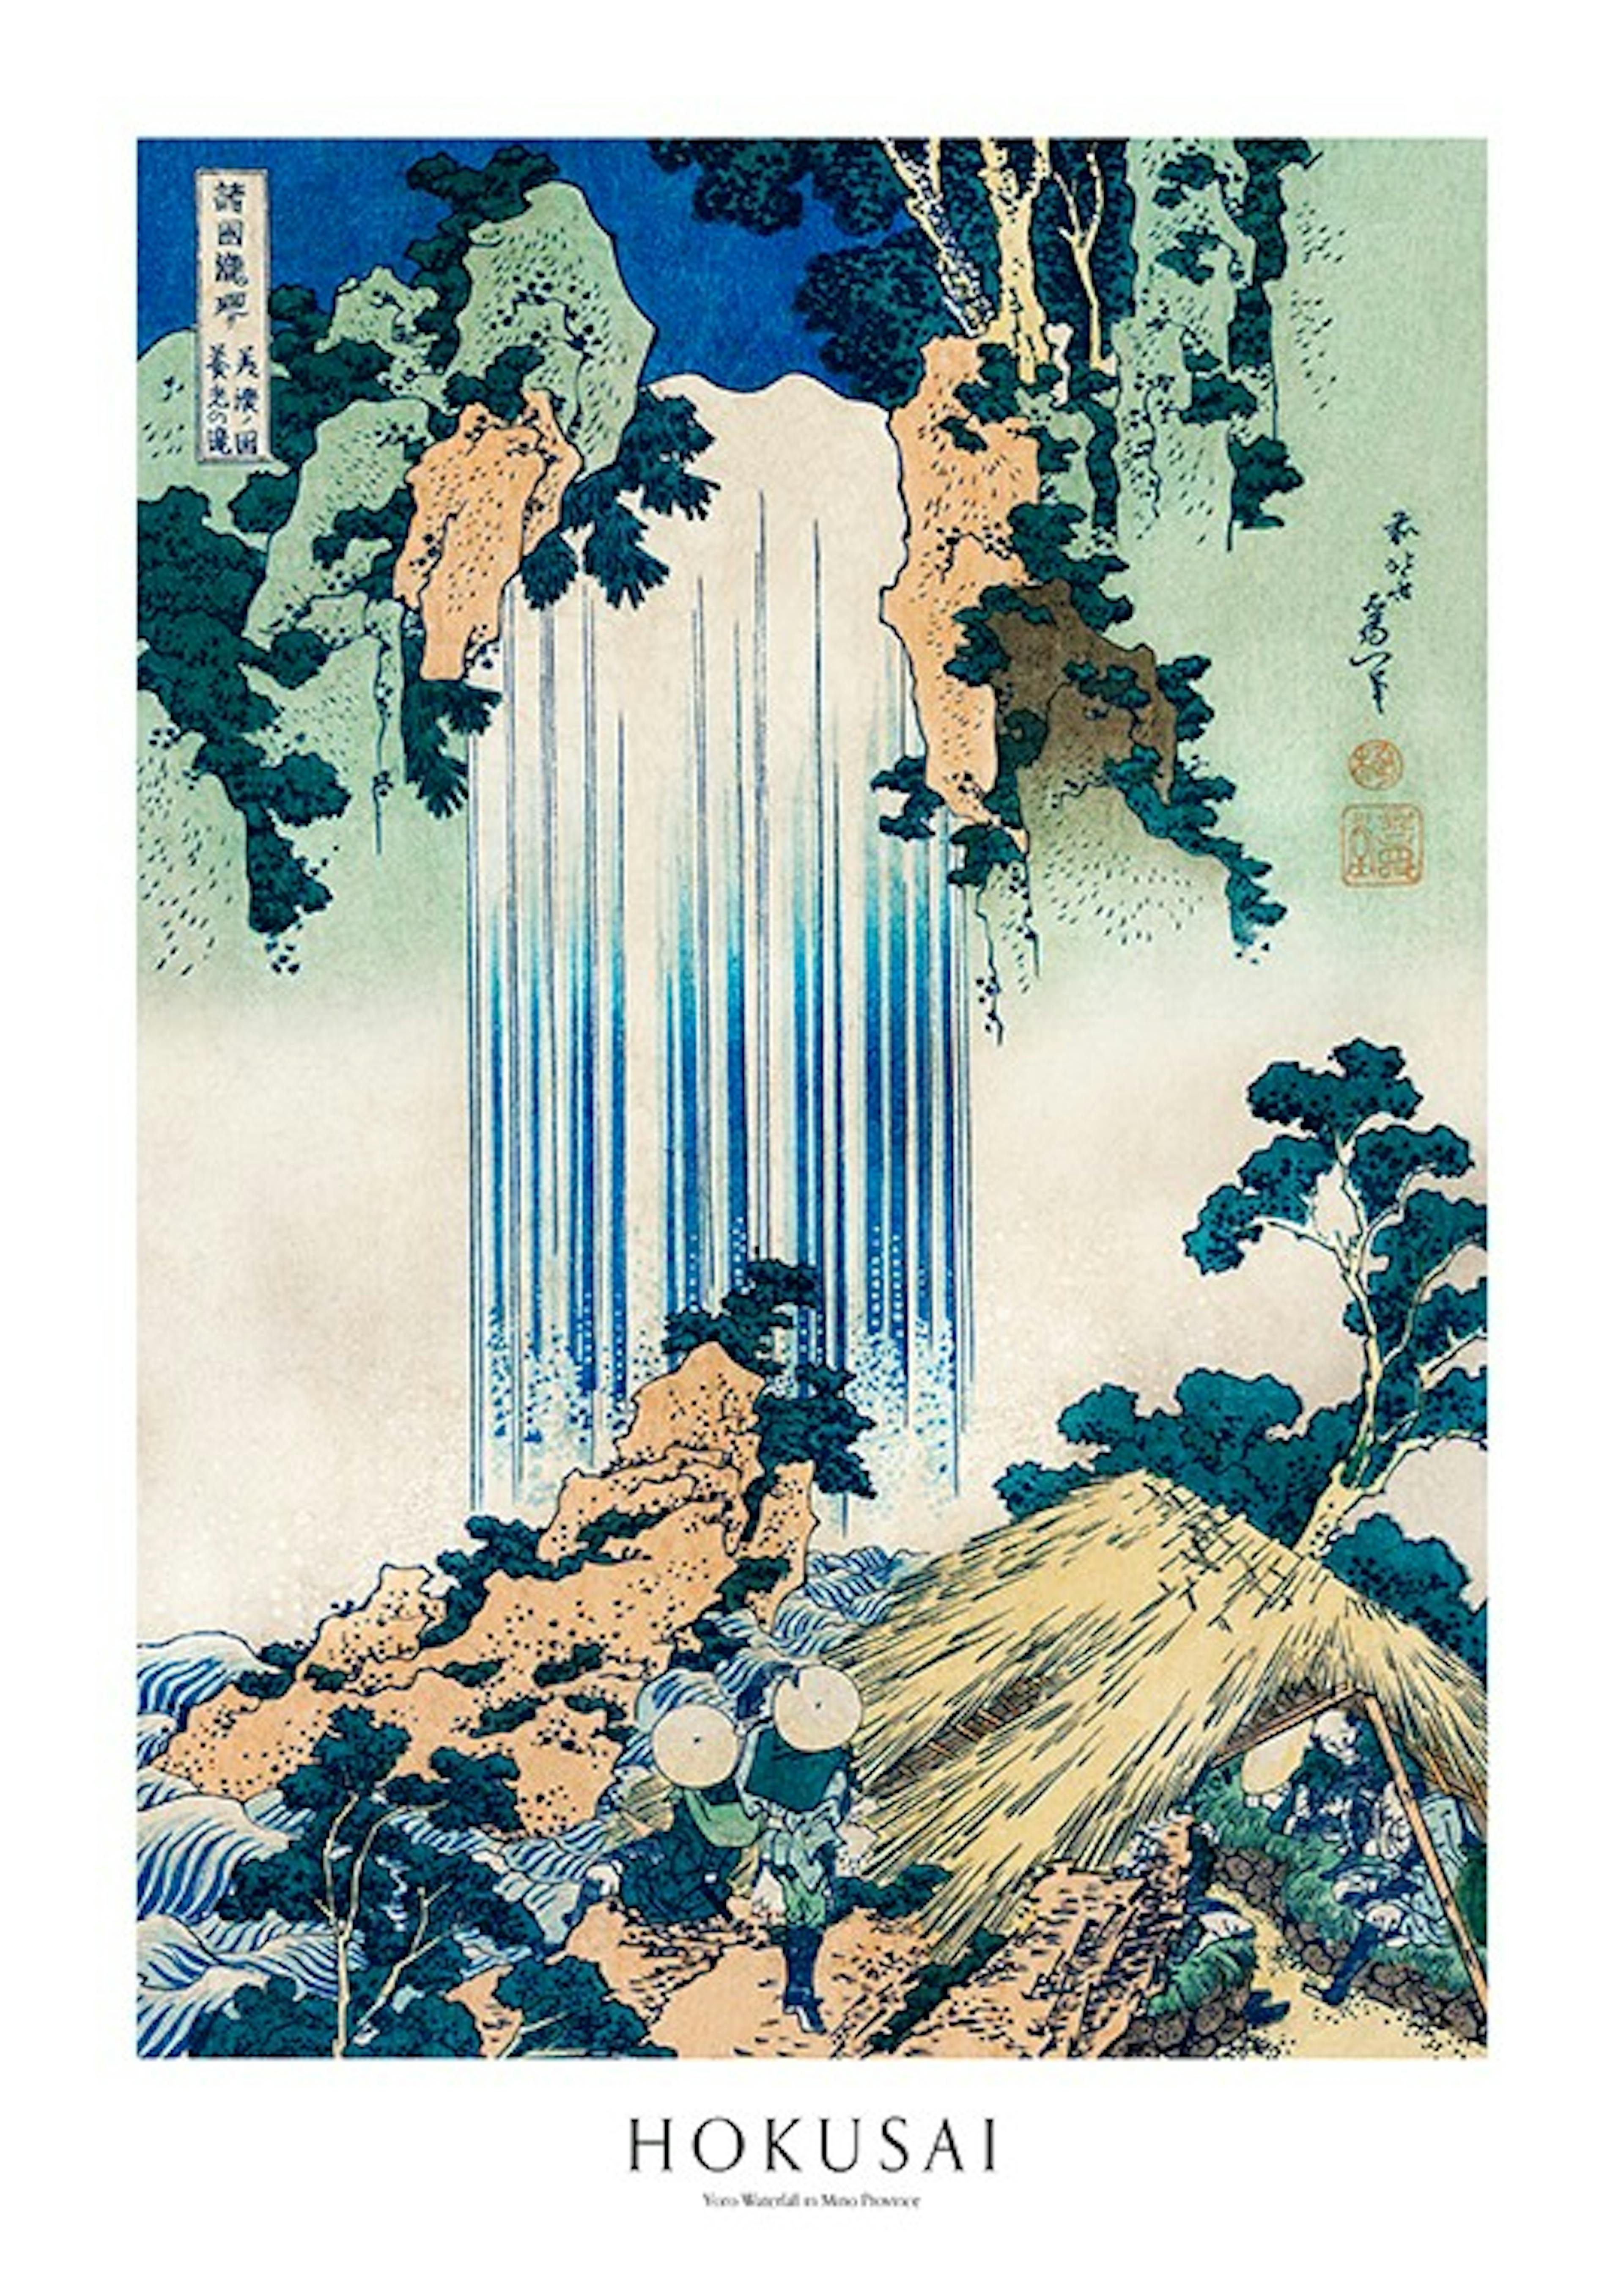 Hokusai - Yoro Waterfall in Mino Province Print 0